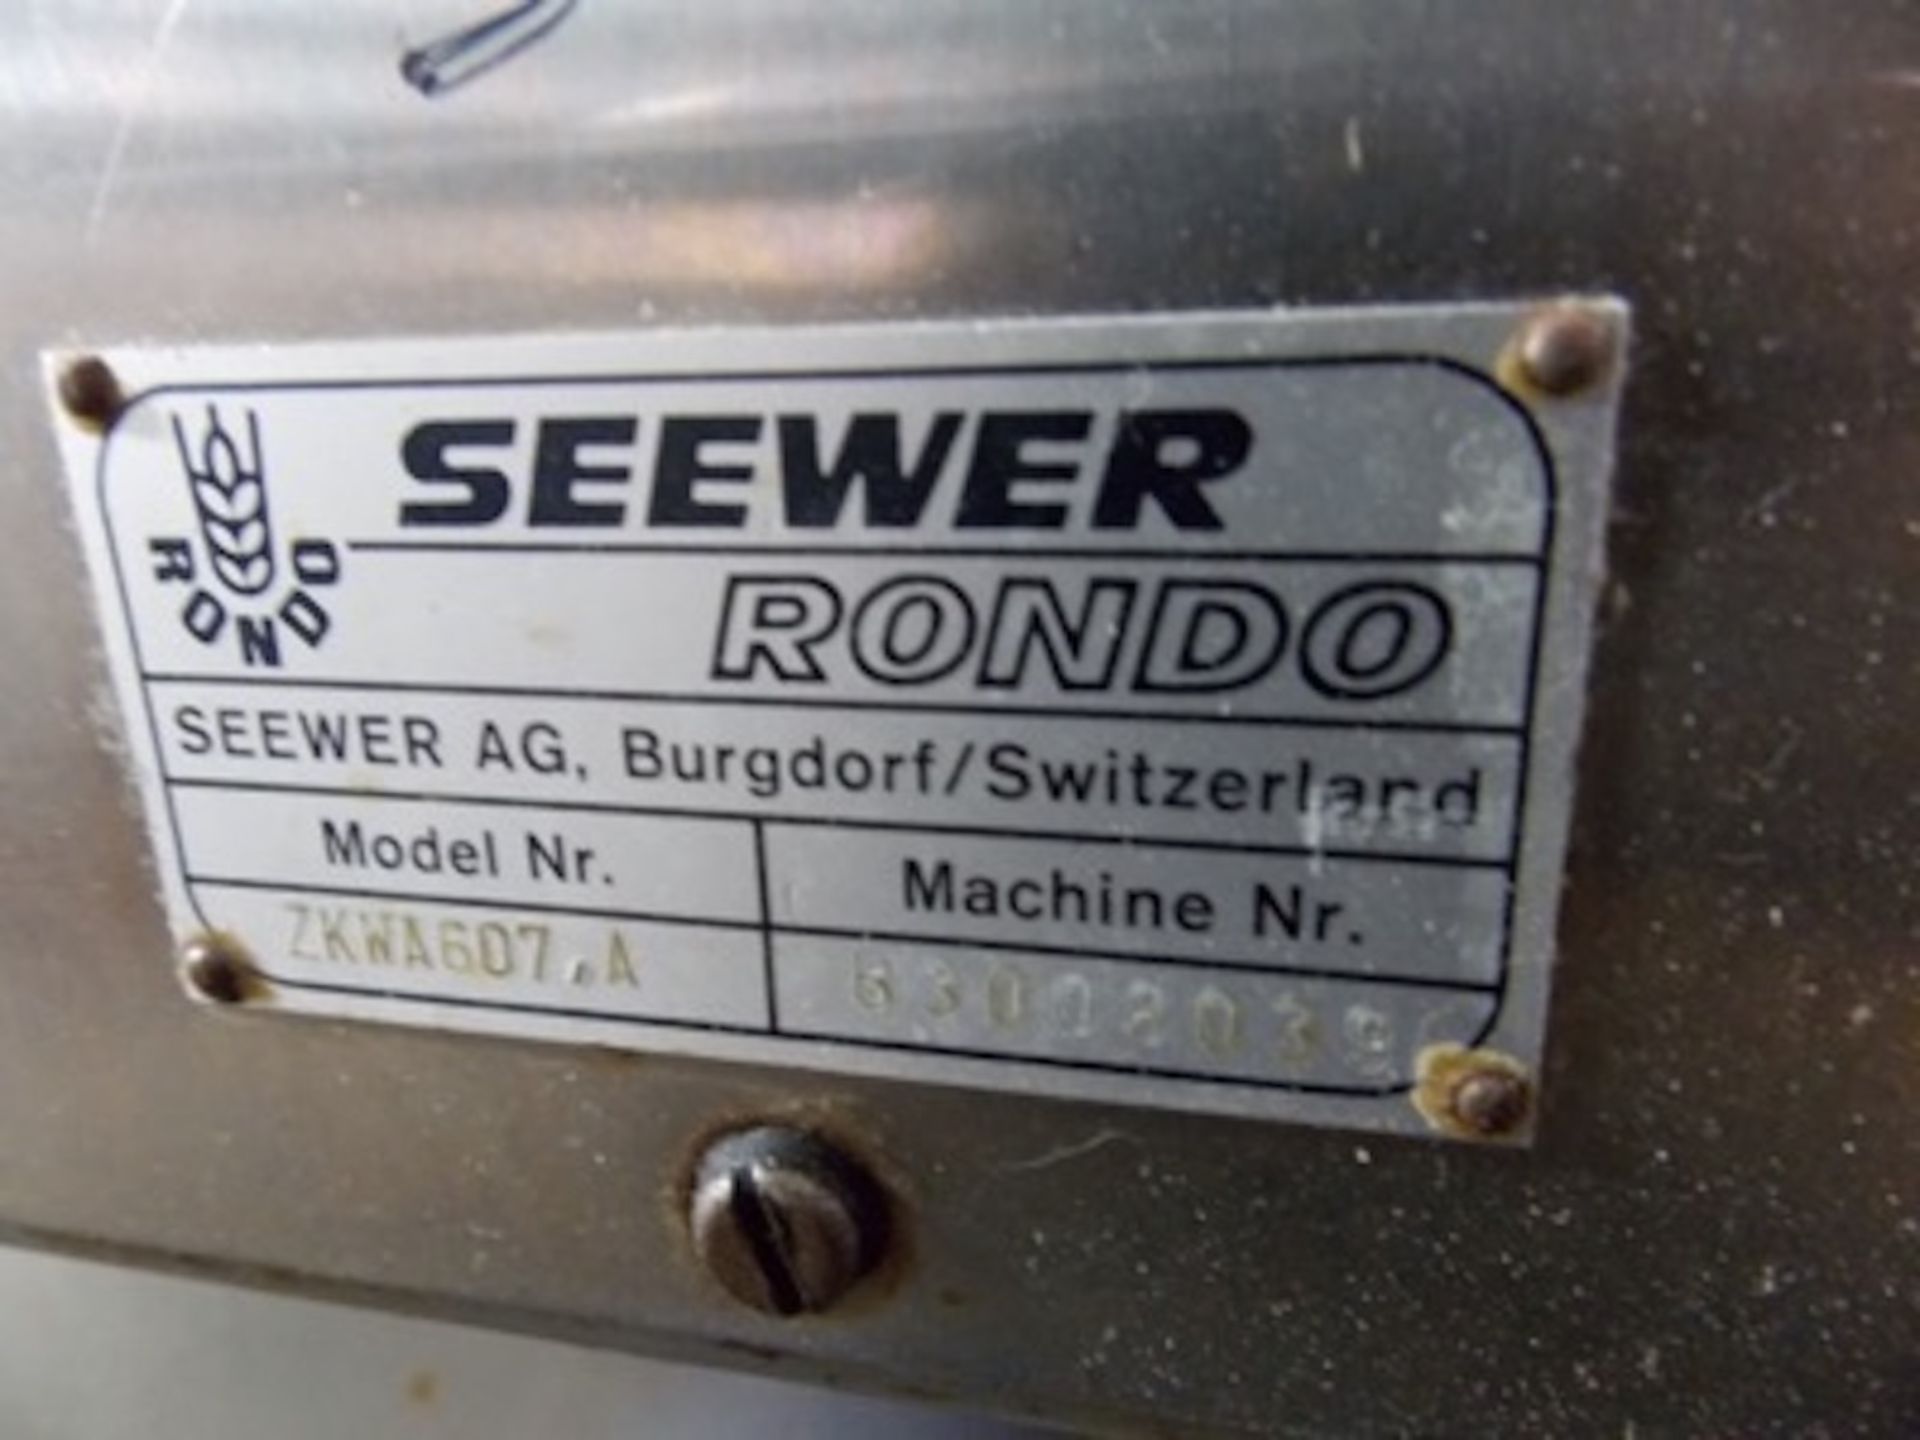 Rondo mod. ZKWA607.A Cinnamon Final Sheeting Duster w/ 24"W x 60" Conveyor; S/N B3008039 - Image 4 of 4